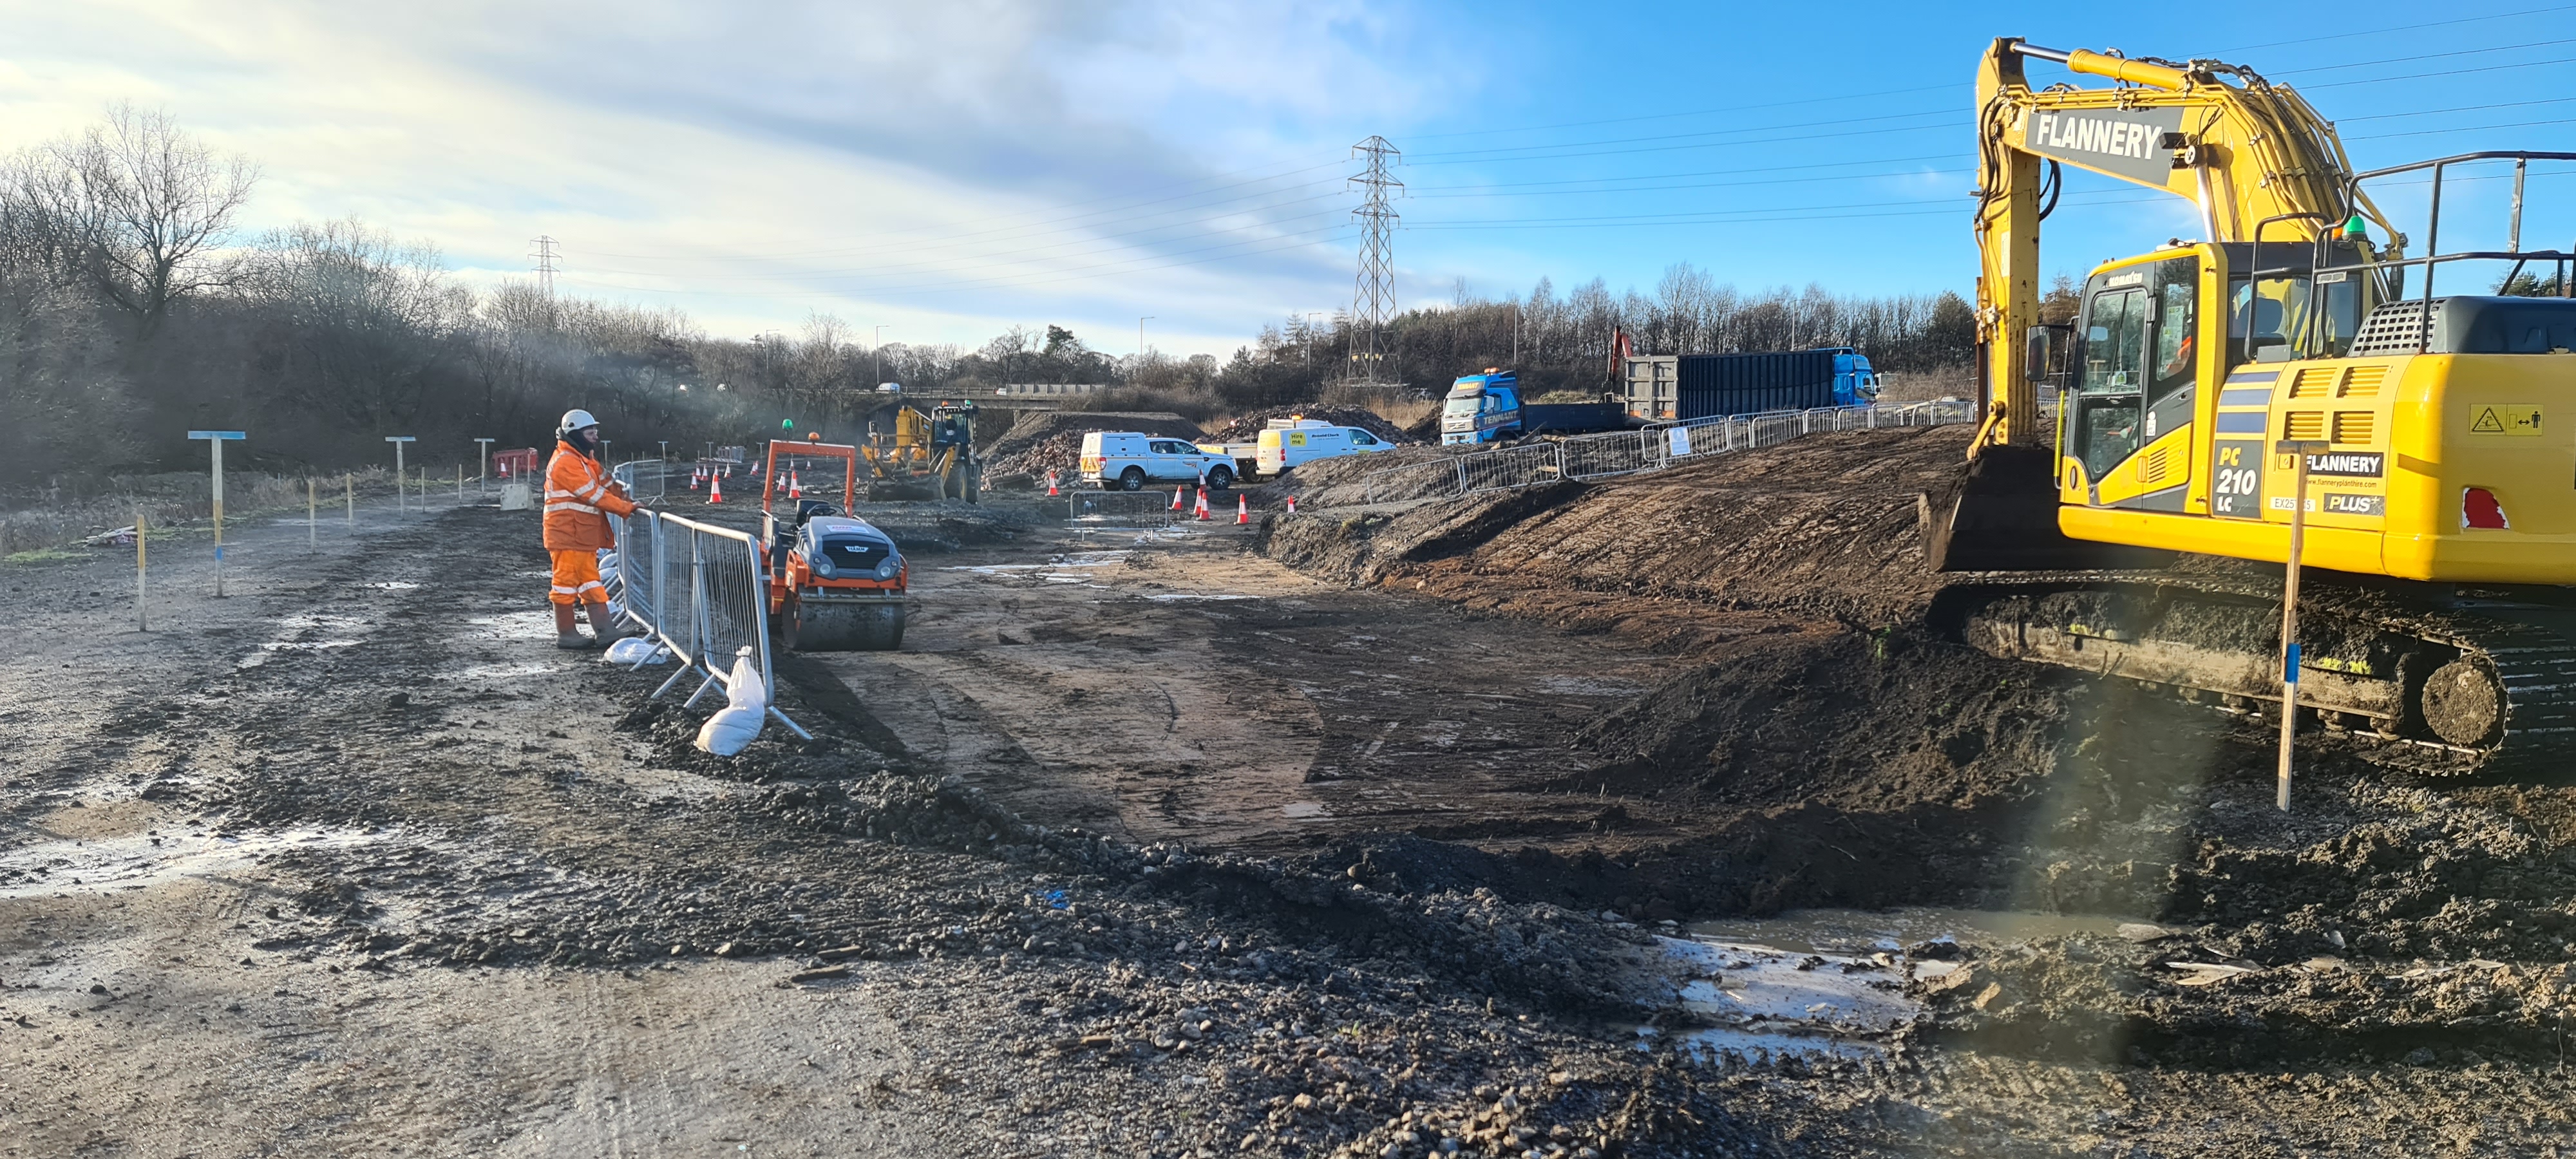 Construction begins on new Cameron Bridge Station